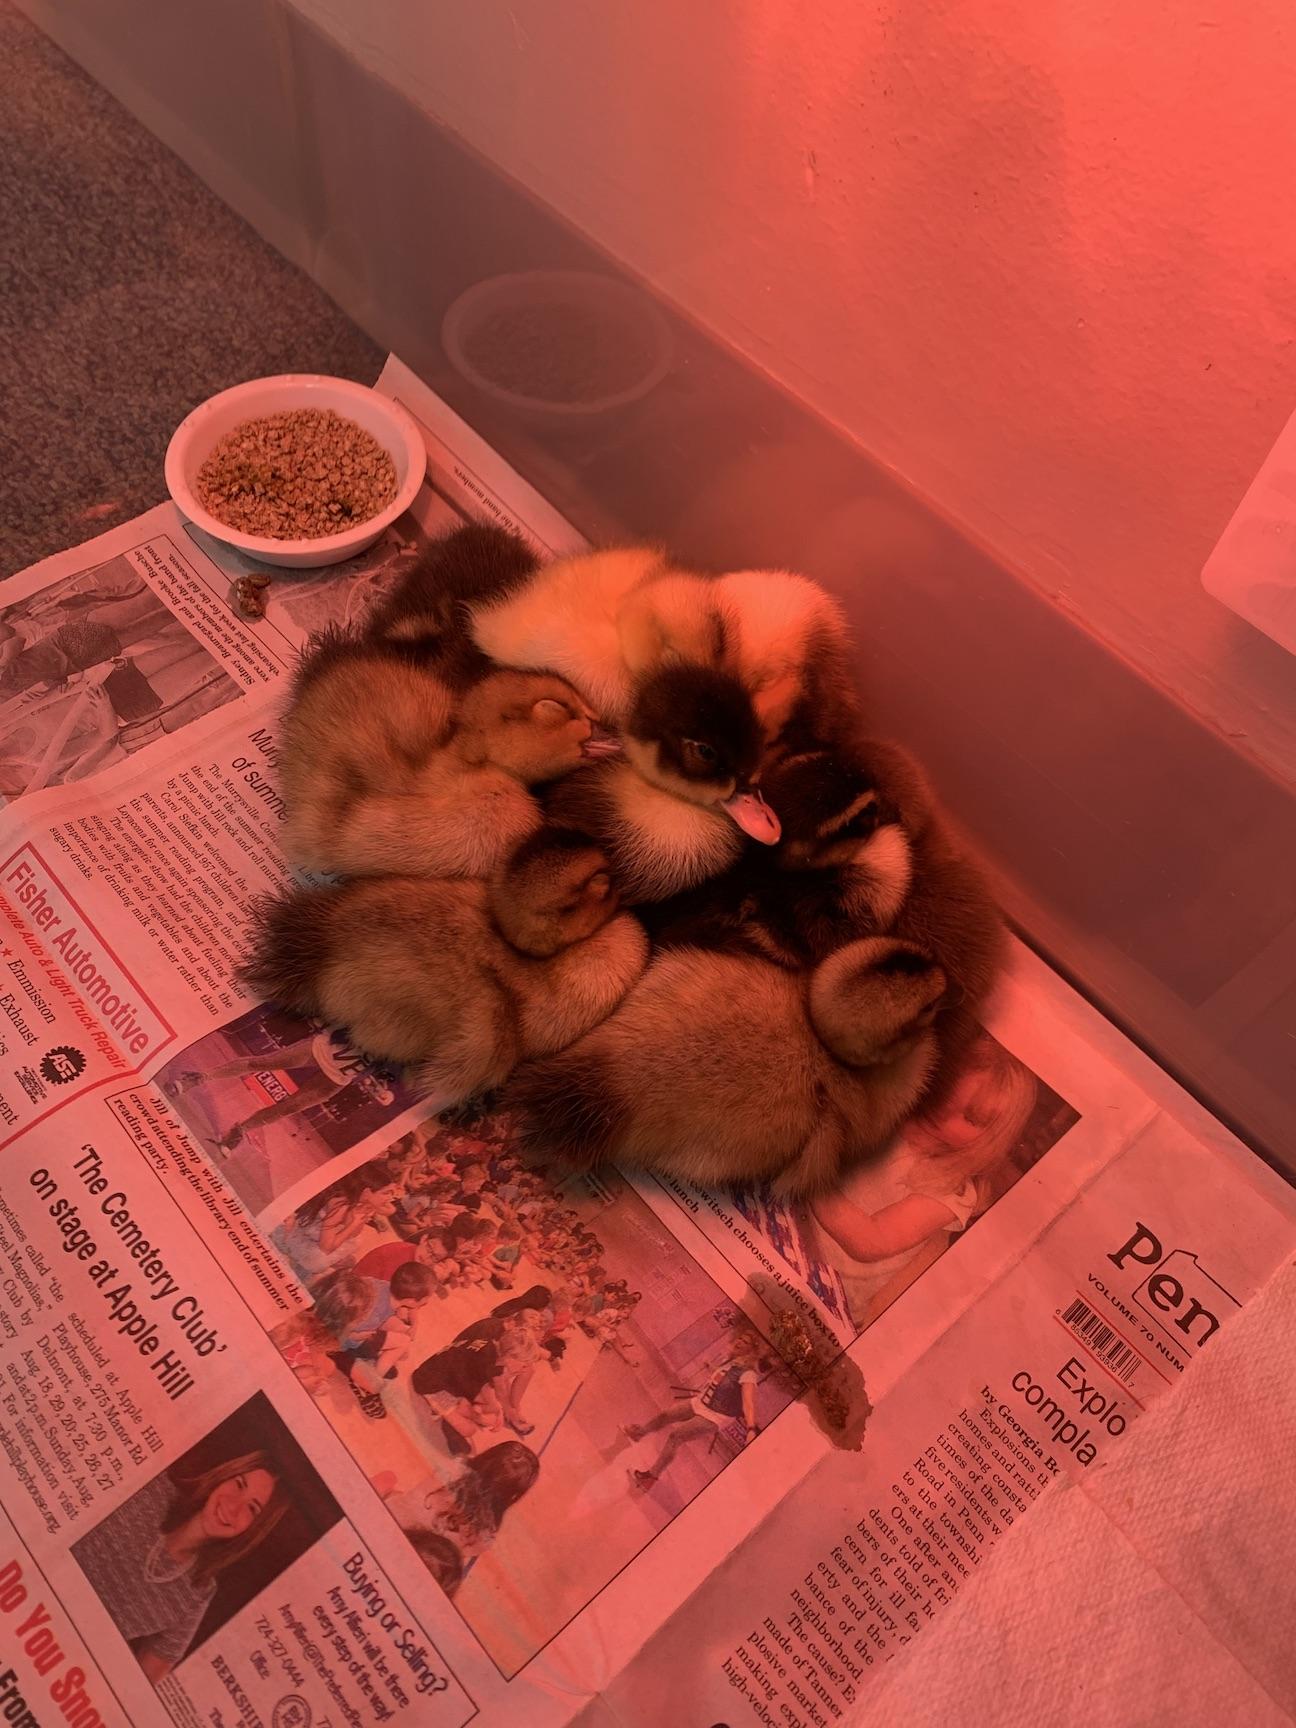 Ducklings rest under their heat lamp